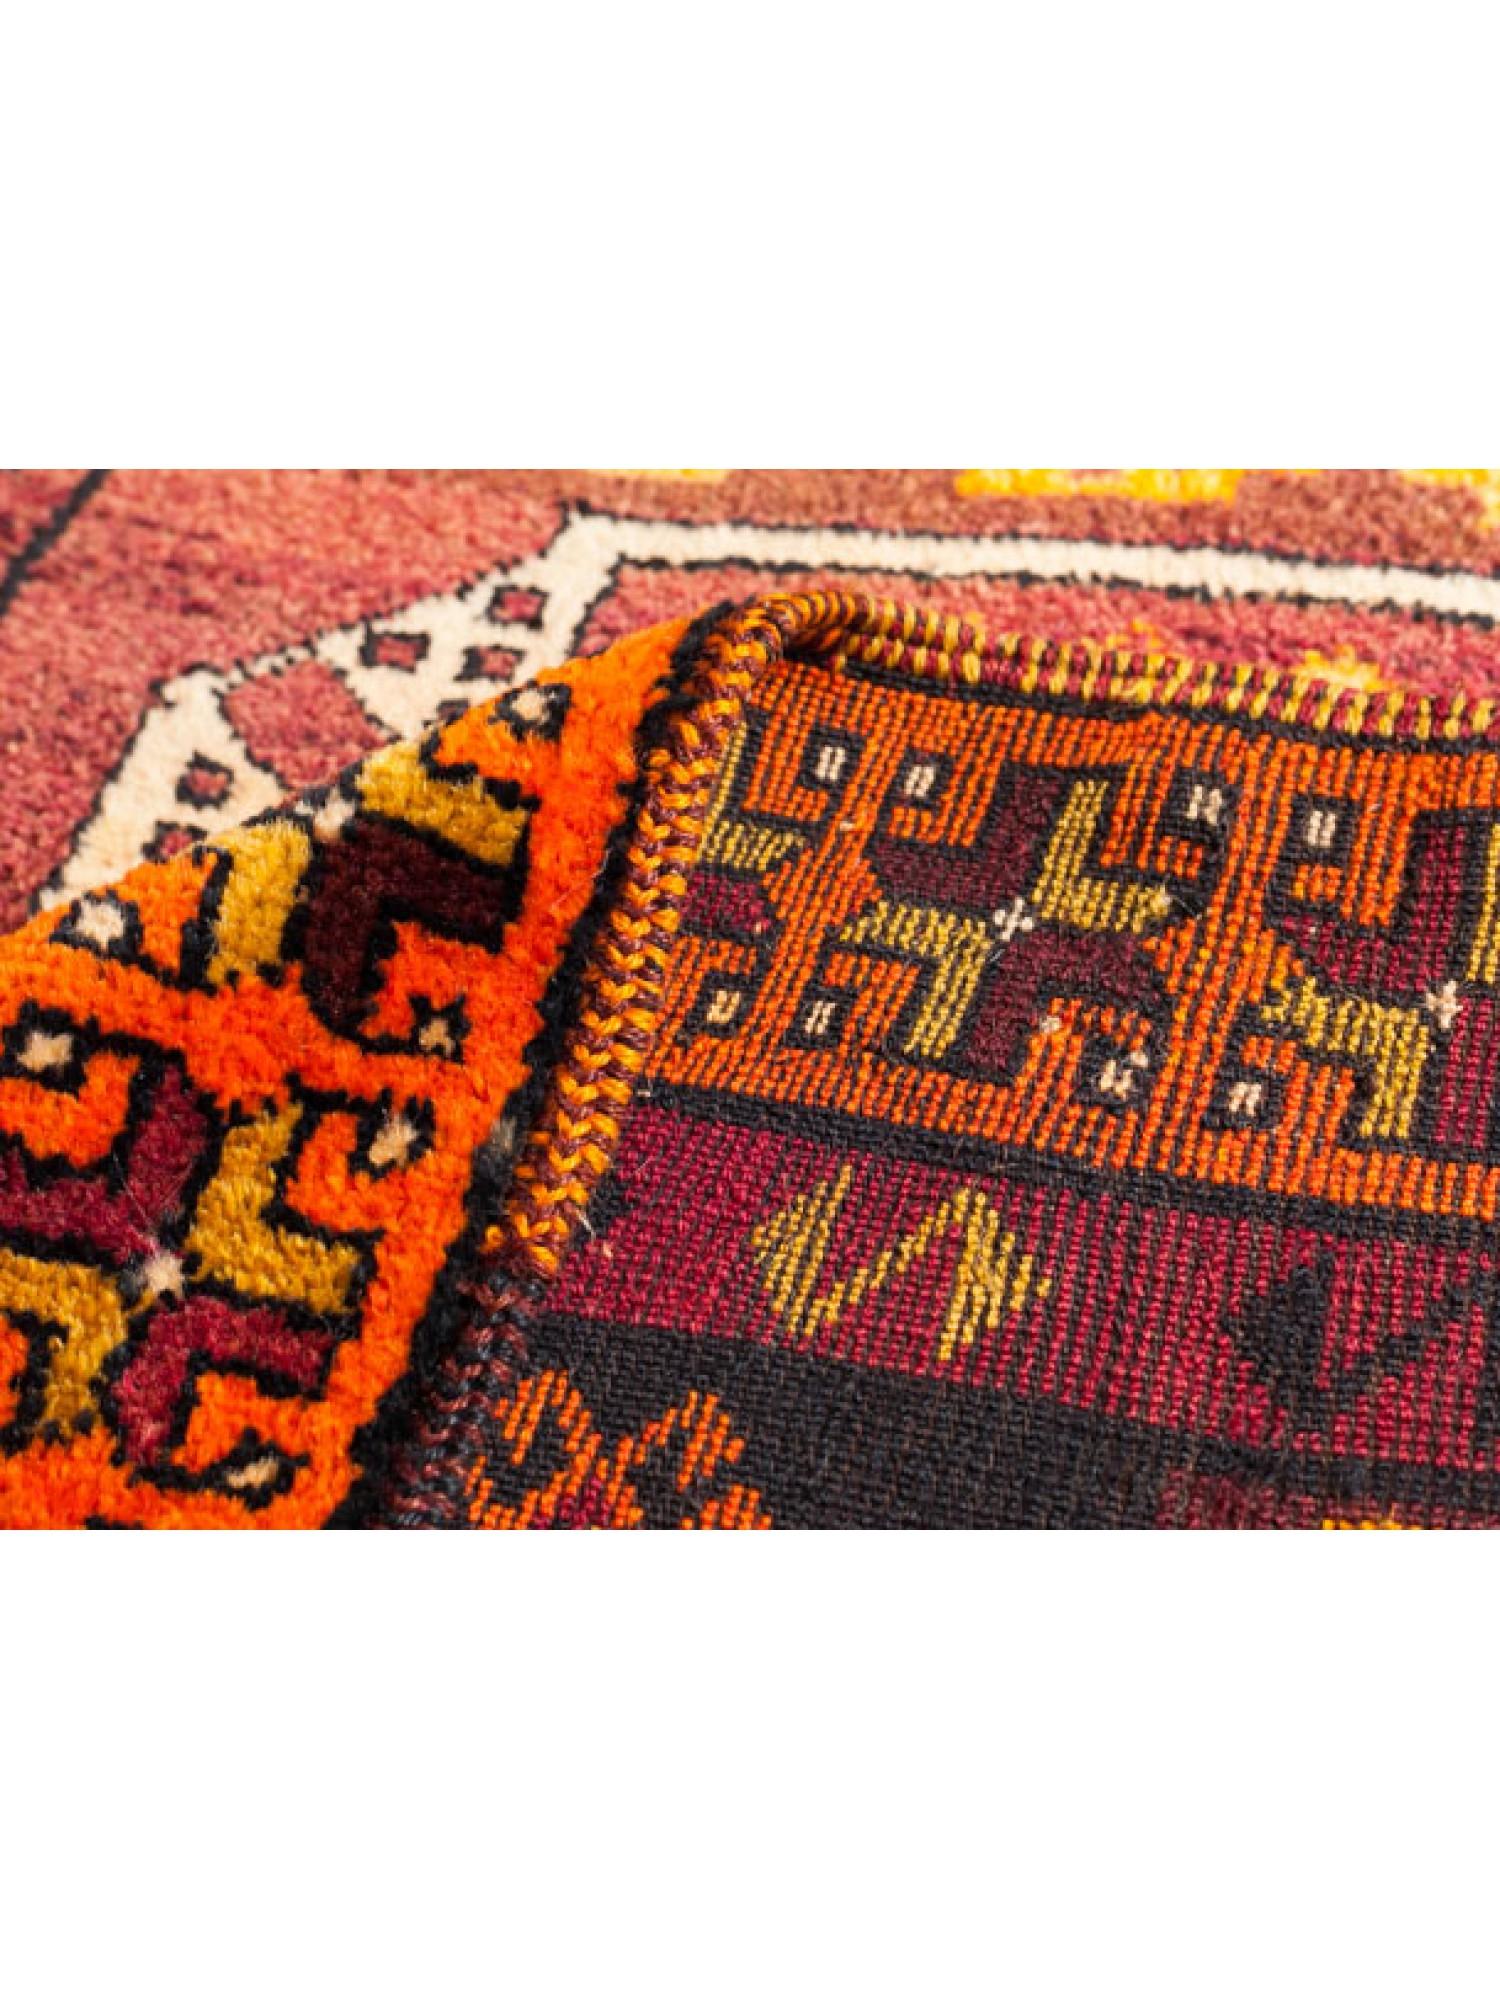 Hand-Woven Antique Kurdish Herki Rug, Eastern Anatolian Carpet  For Sale